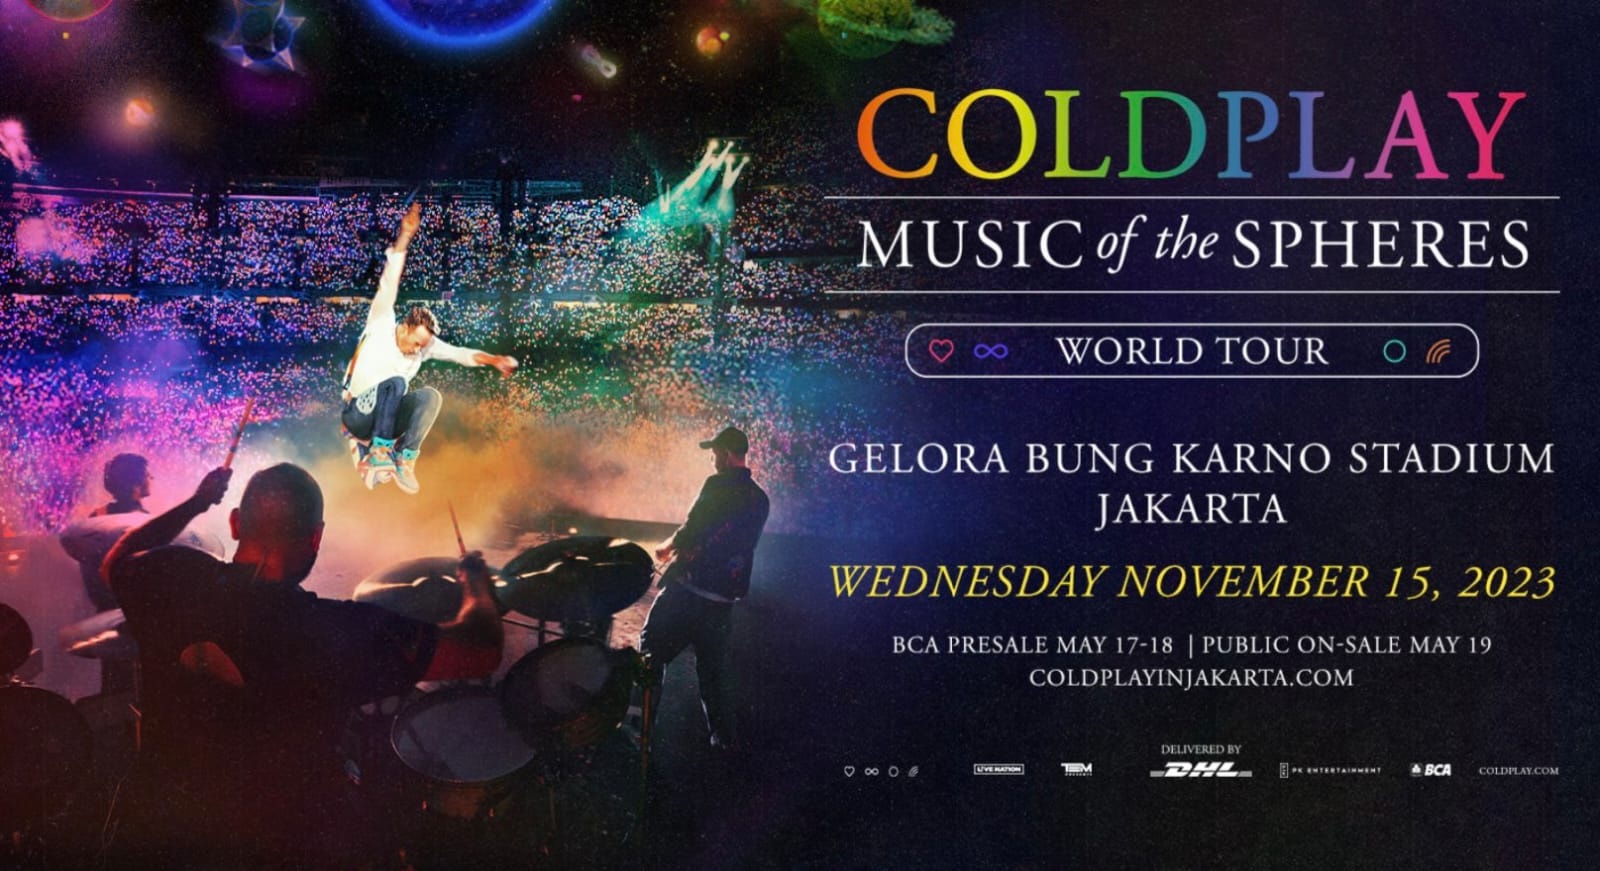  Music Of The Sphres, Coldplay Bakal Ramaikan GBK di Bulan November